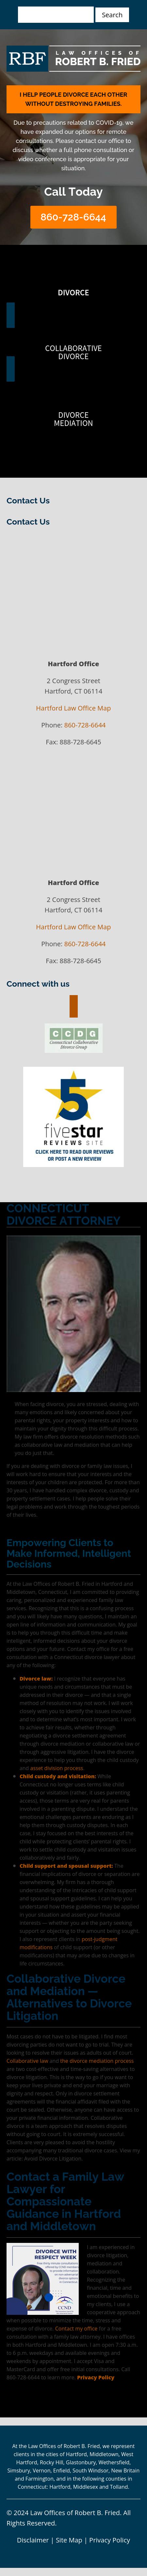 Robert B. Fried - Hartford CT Lawyers